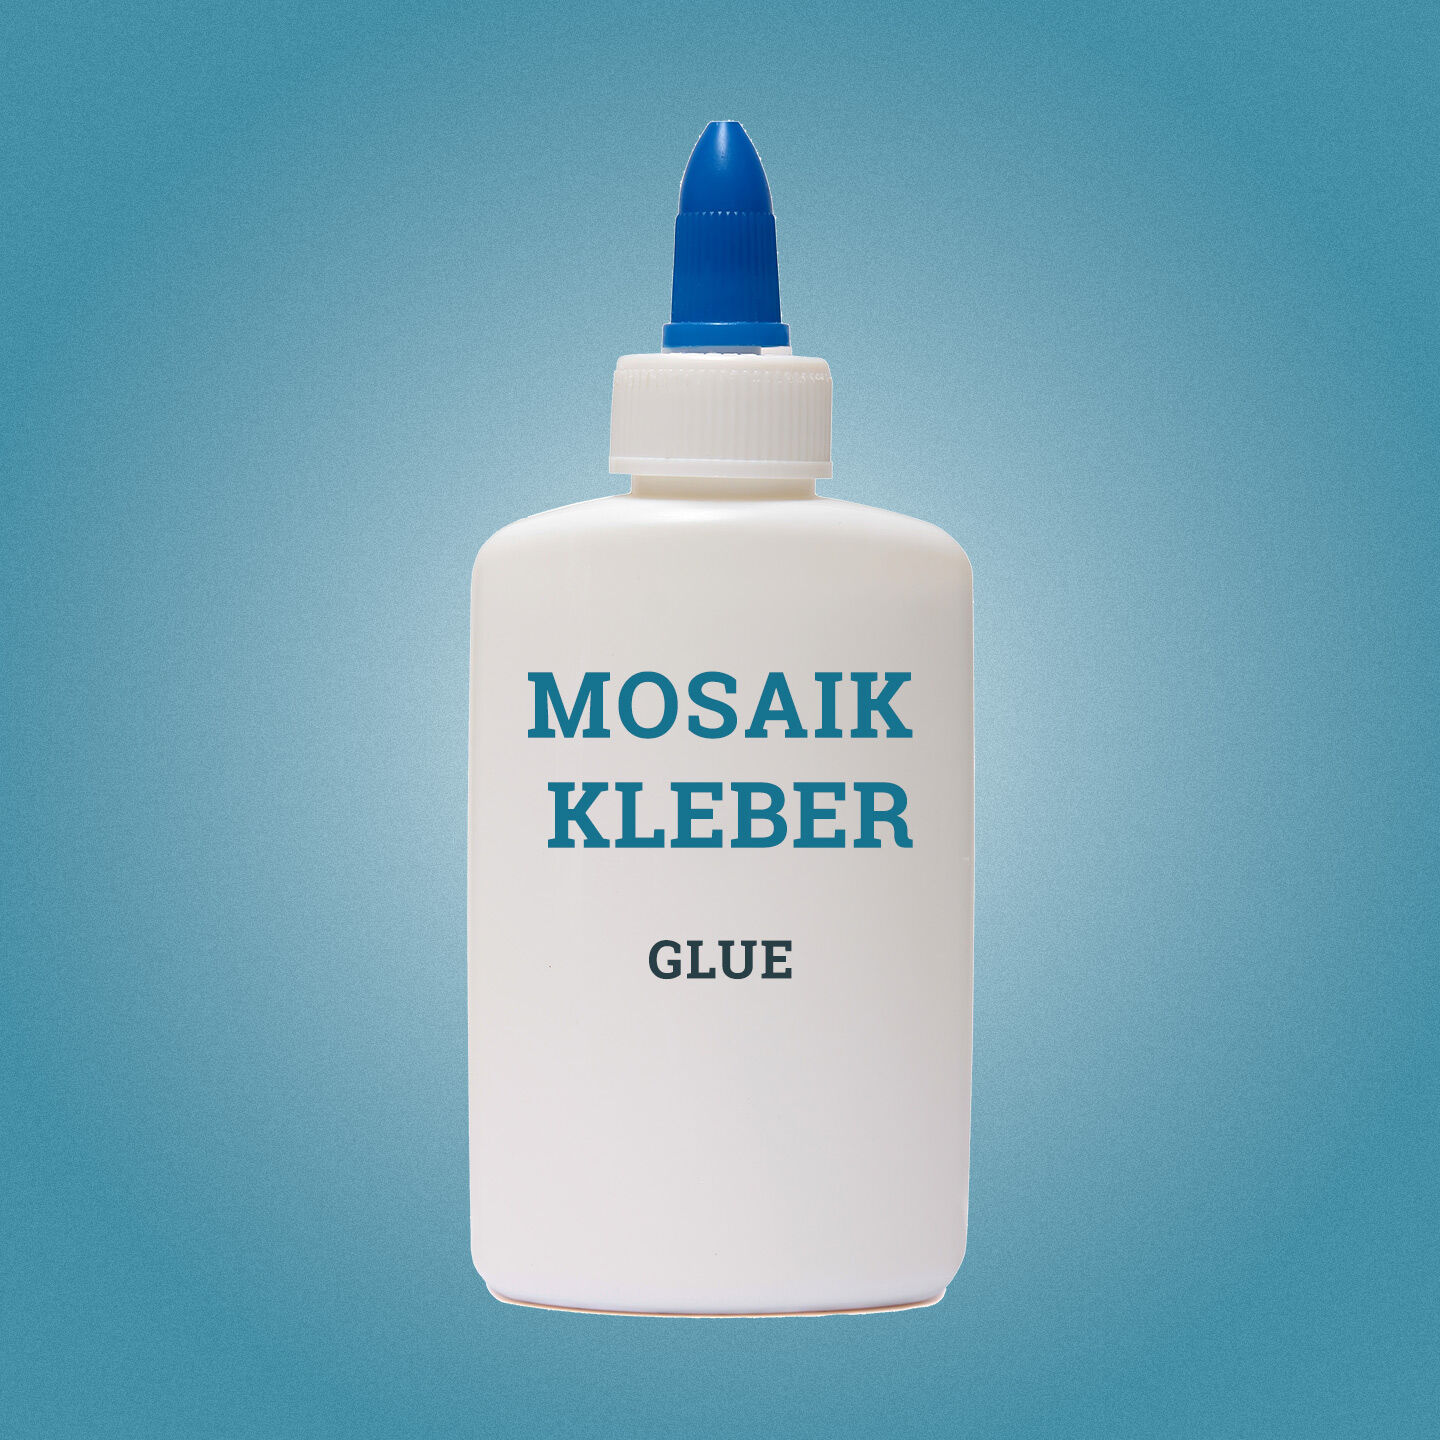 Buy Mosaic glue